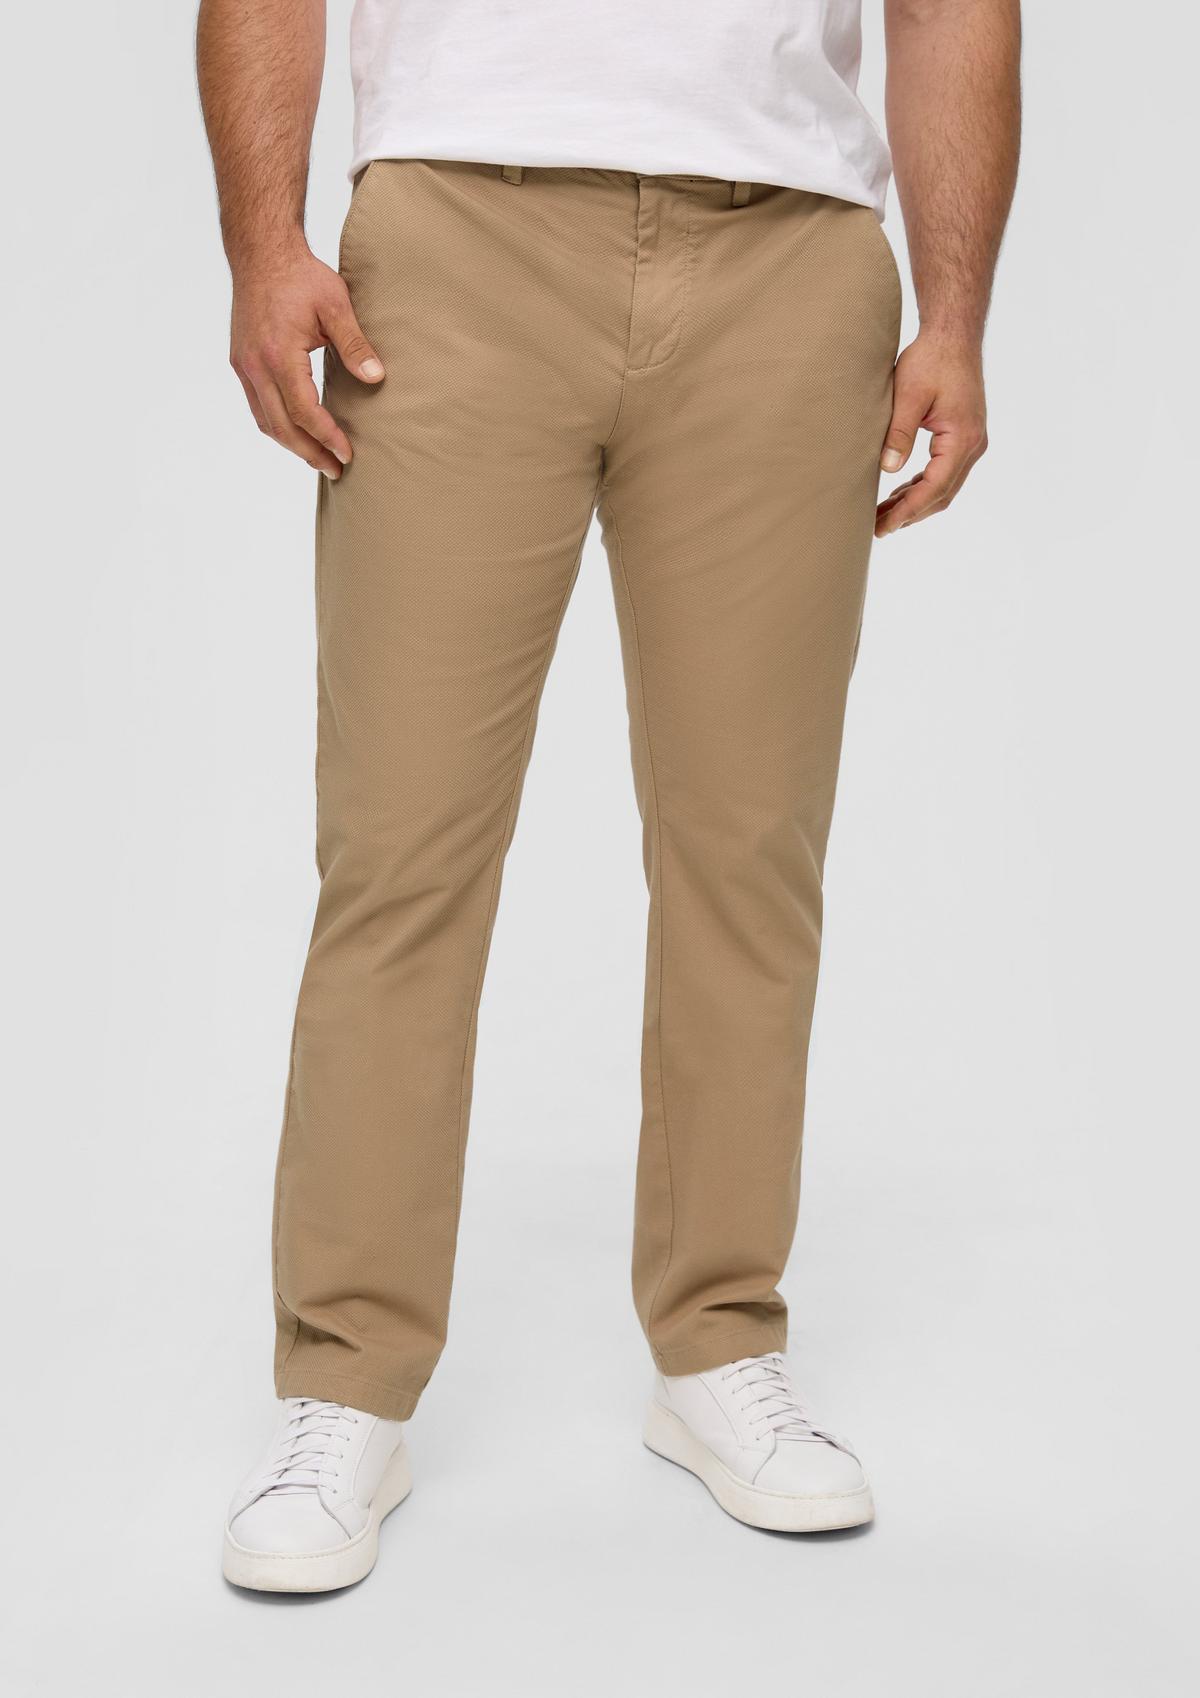 s.Oliver Detroit jeans / regular fit / straight leg / mid rise